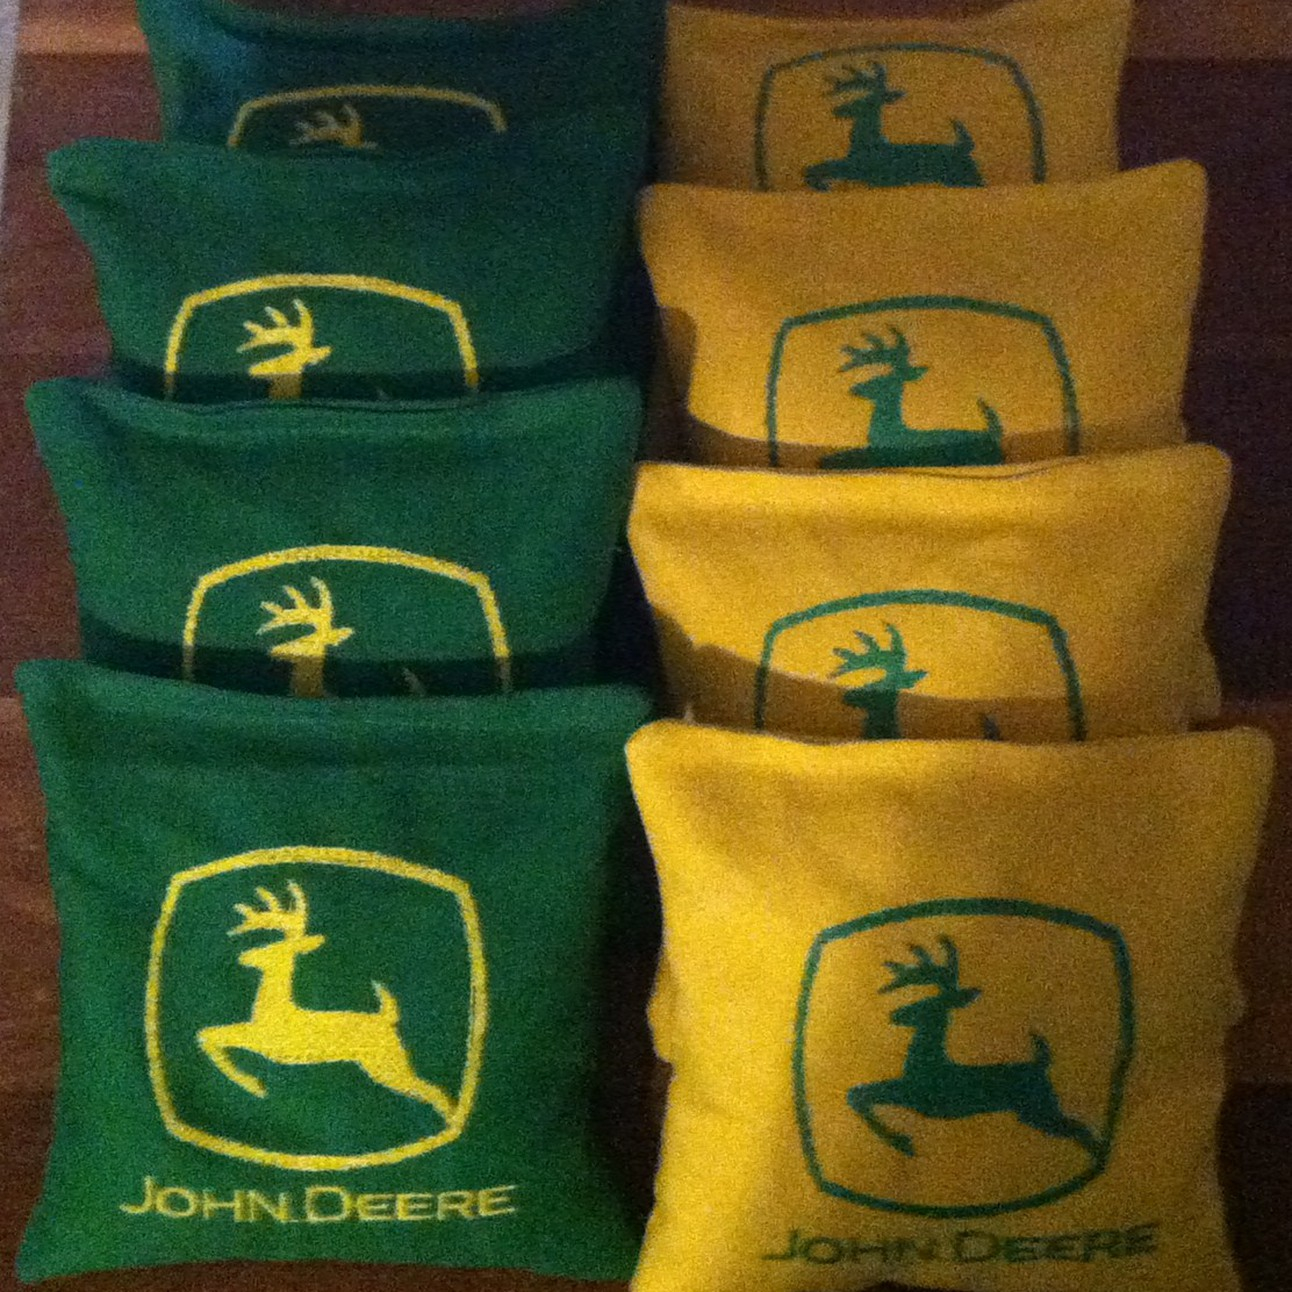 John Deere Embroidery Patterns John Deere Embroidered Bags